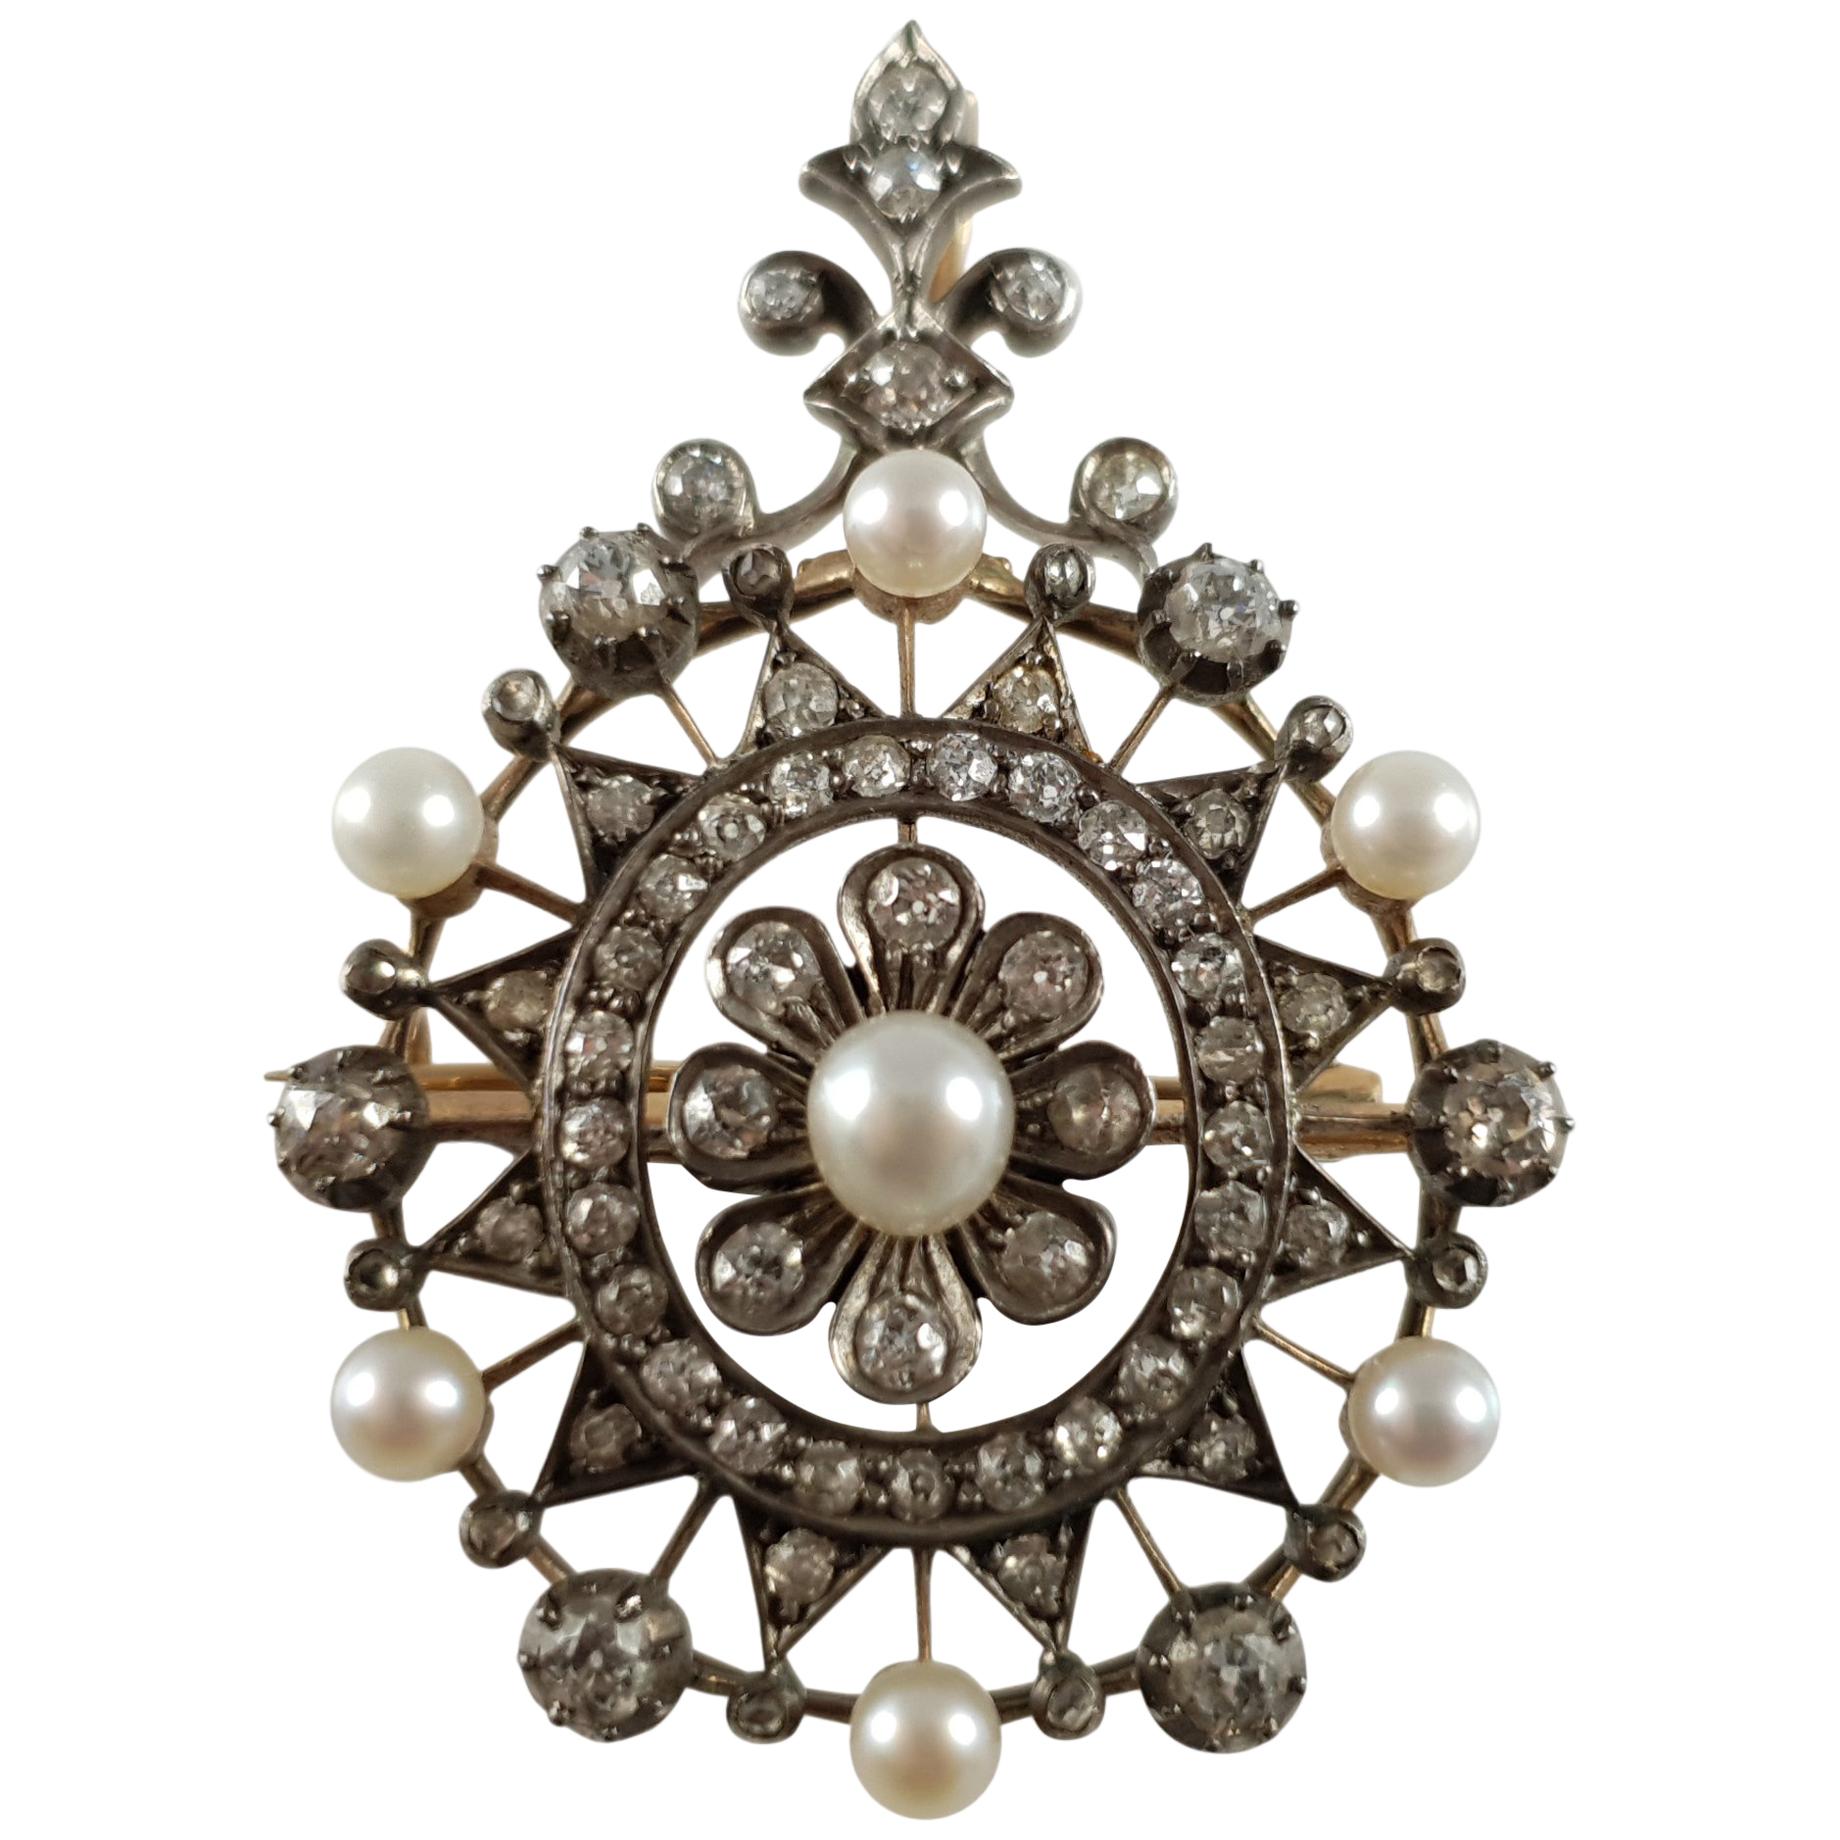 Victorian 15 Karat Gold, Silver, Diamond, and Pearl Pendant Brooch, circa 1880